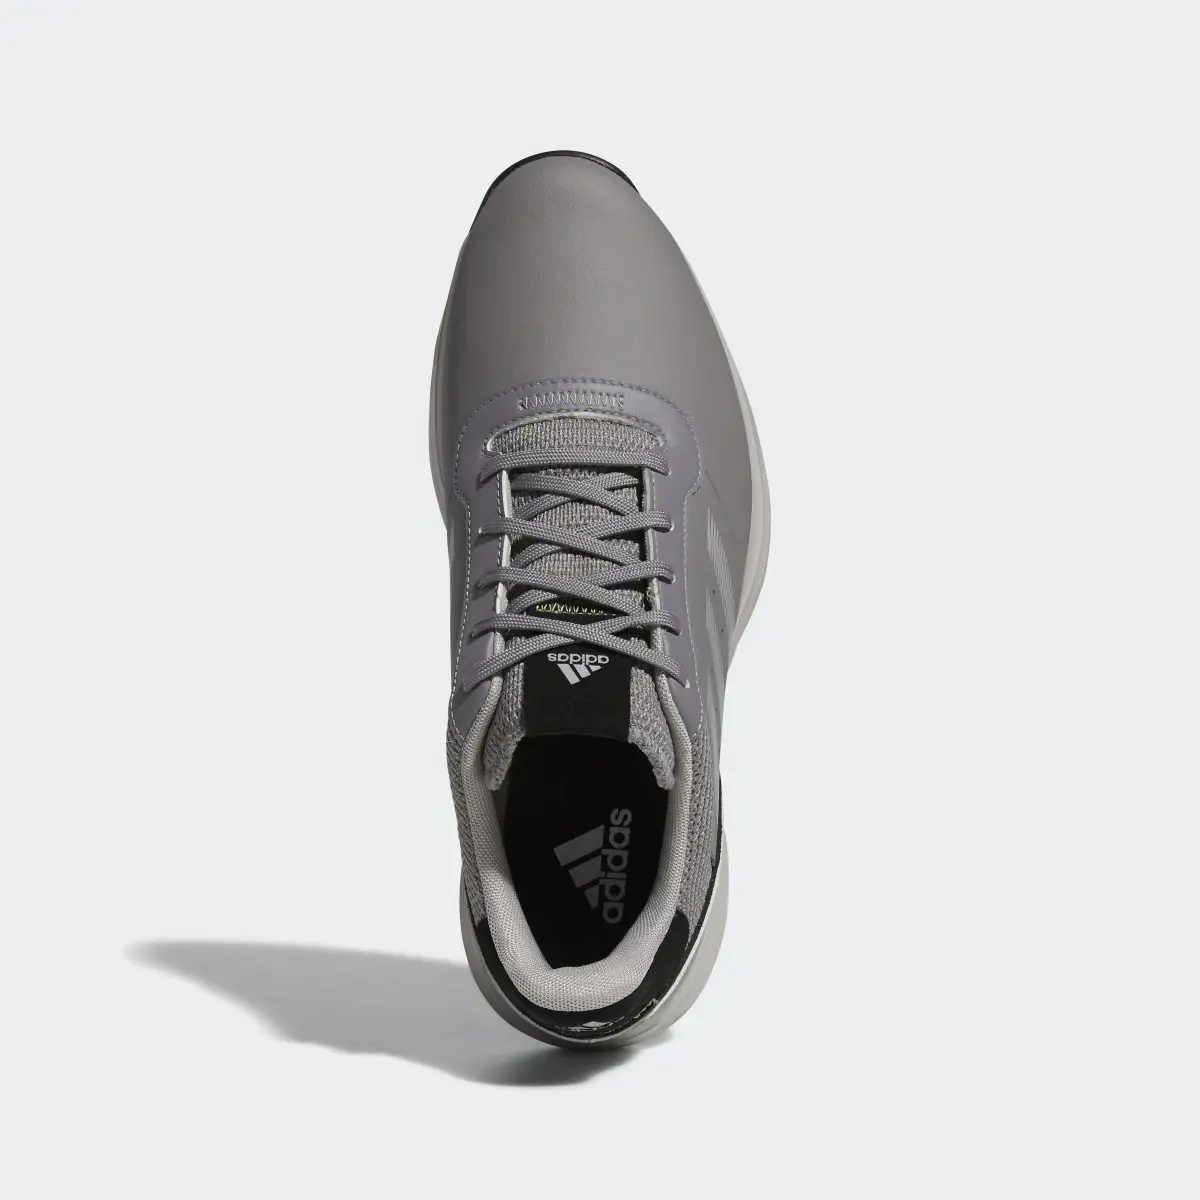 Adidas Zapatilla de golf S2G Spikeless Leather. 3